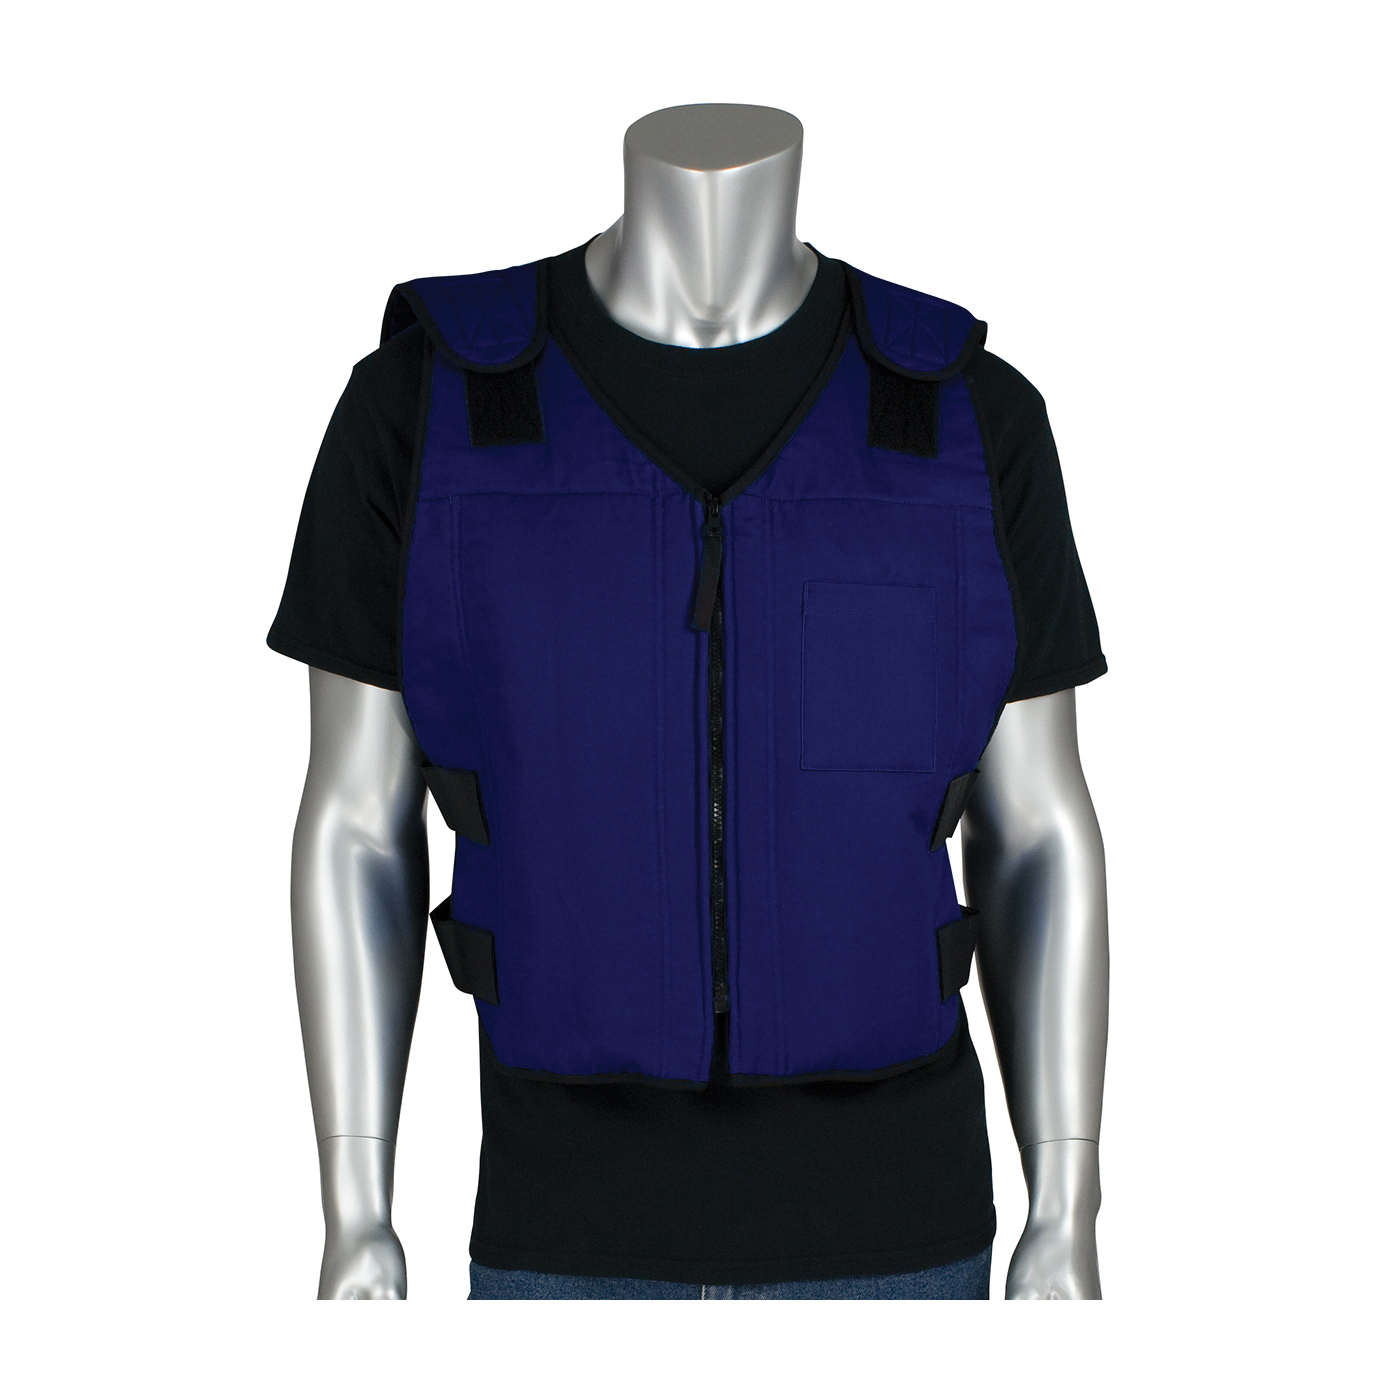 PIP® 390-EZFRPC-2X/3X EZ-Cool® Active Fit Premium FR Phase Change Cooling Vest With Insulated Cooler Bag, 2XL/3XL Size, Zipper Closure, Cotton/Nylon, Navy Blue